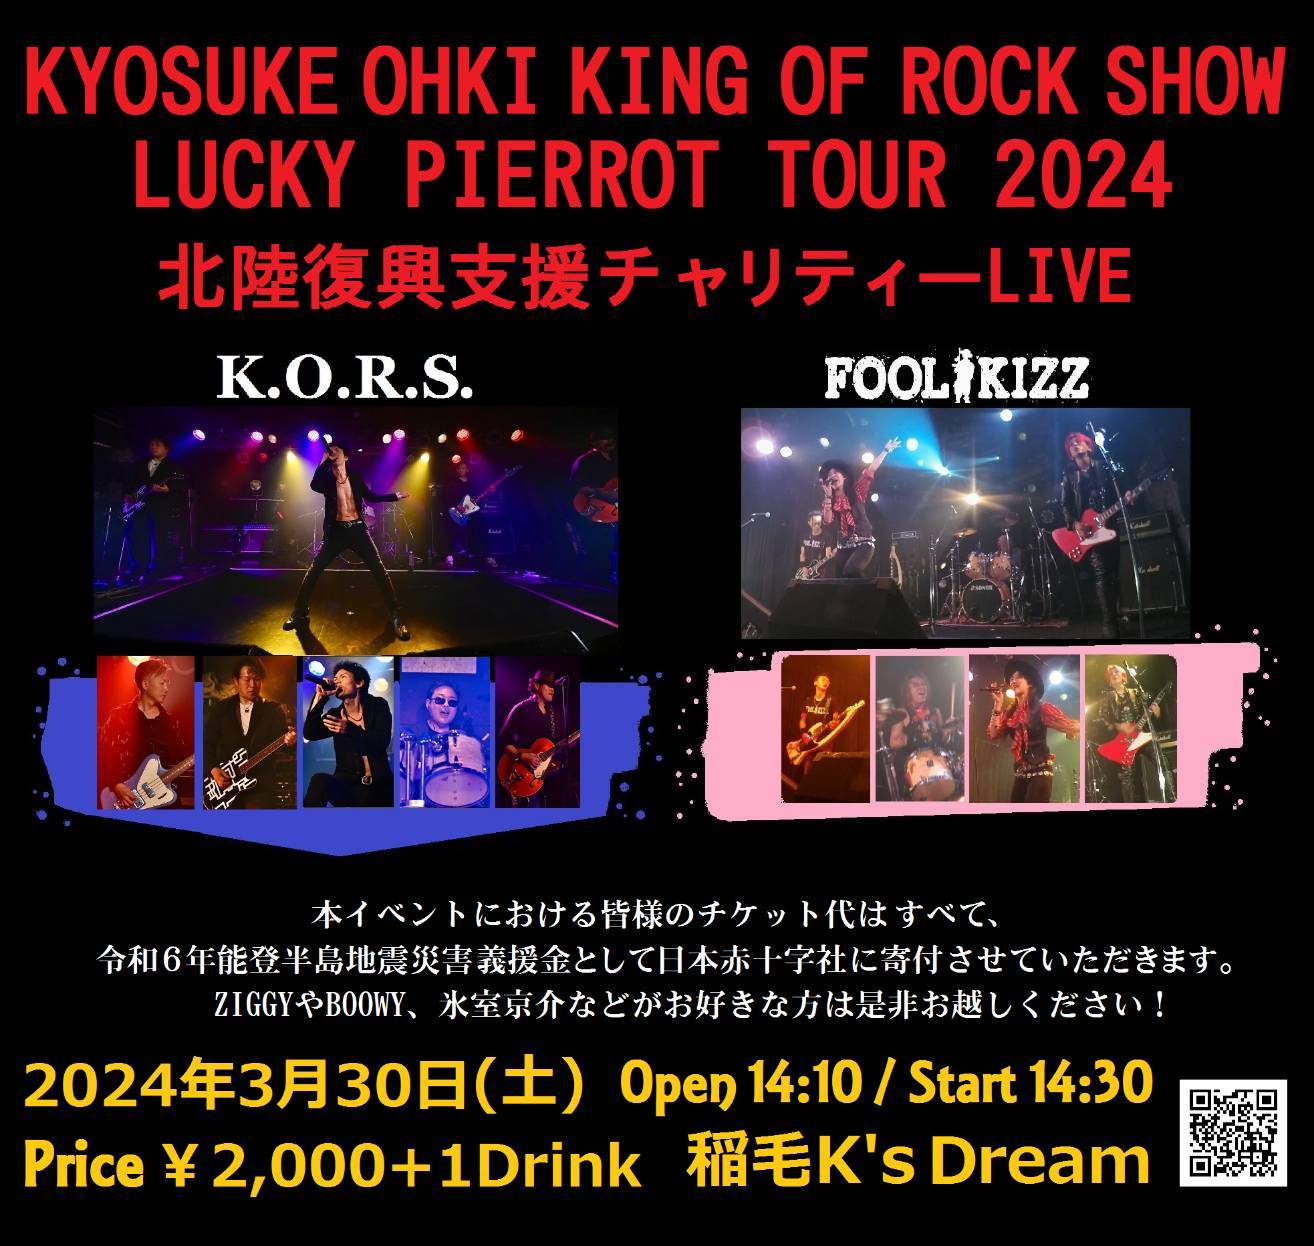 KYOSUKE OHKI KING OF ROCK SHOW LUCKY PIERROT TOUR 2024” -北陸復興 